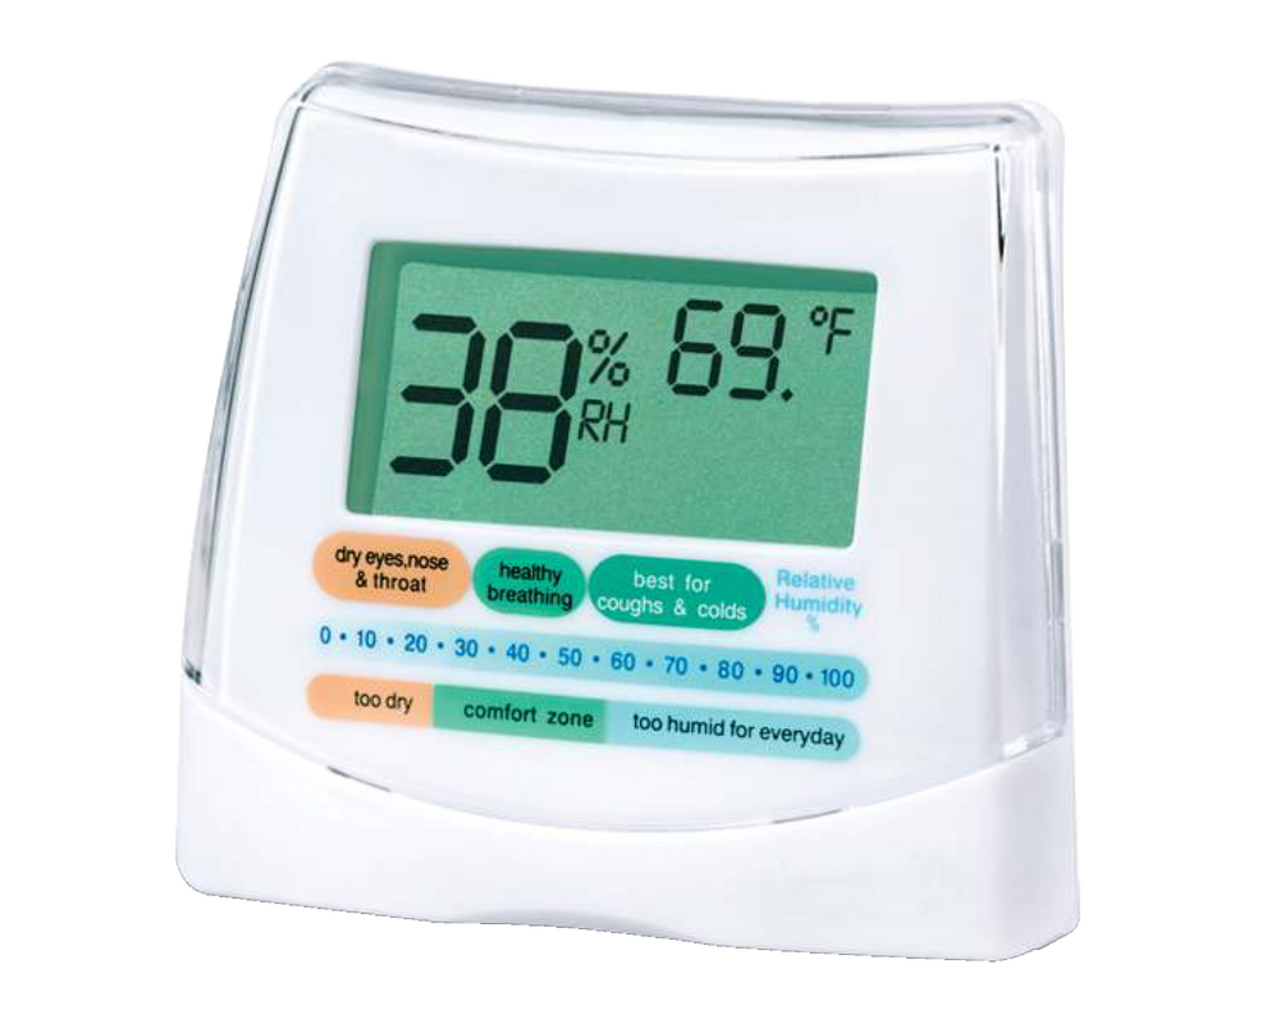 Cheap Mini LCD Digital Thermometer Hygrometer Indoor Outdoor Temperature  Home Hydrometer Gauge Sensor Temperature Humidity Meter Tool